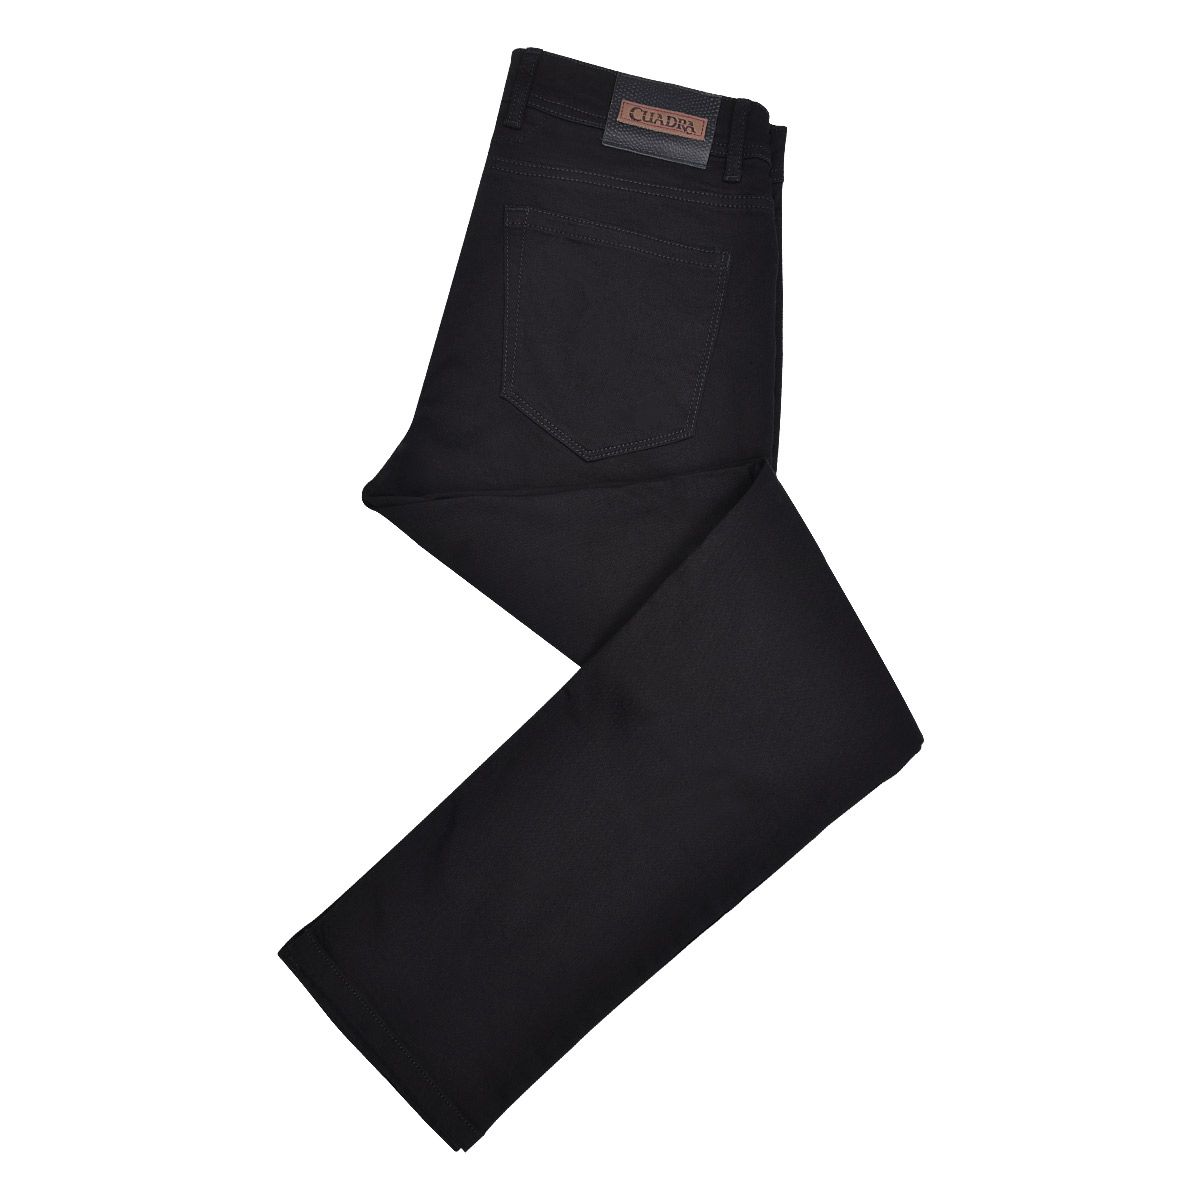 JN0LP20 - Cuadra denim black ultimate comfort stretch denim jeans for men-CUADRA-Kuet-Cuadra-Boots